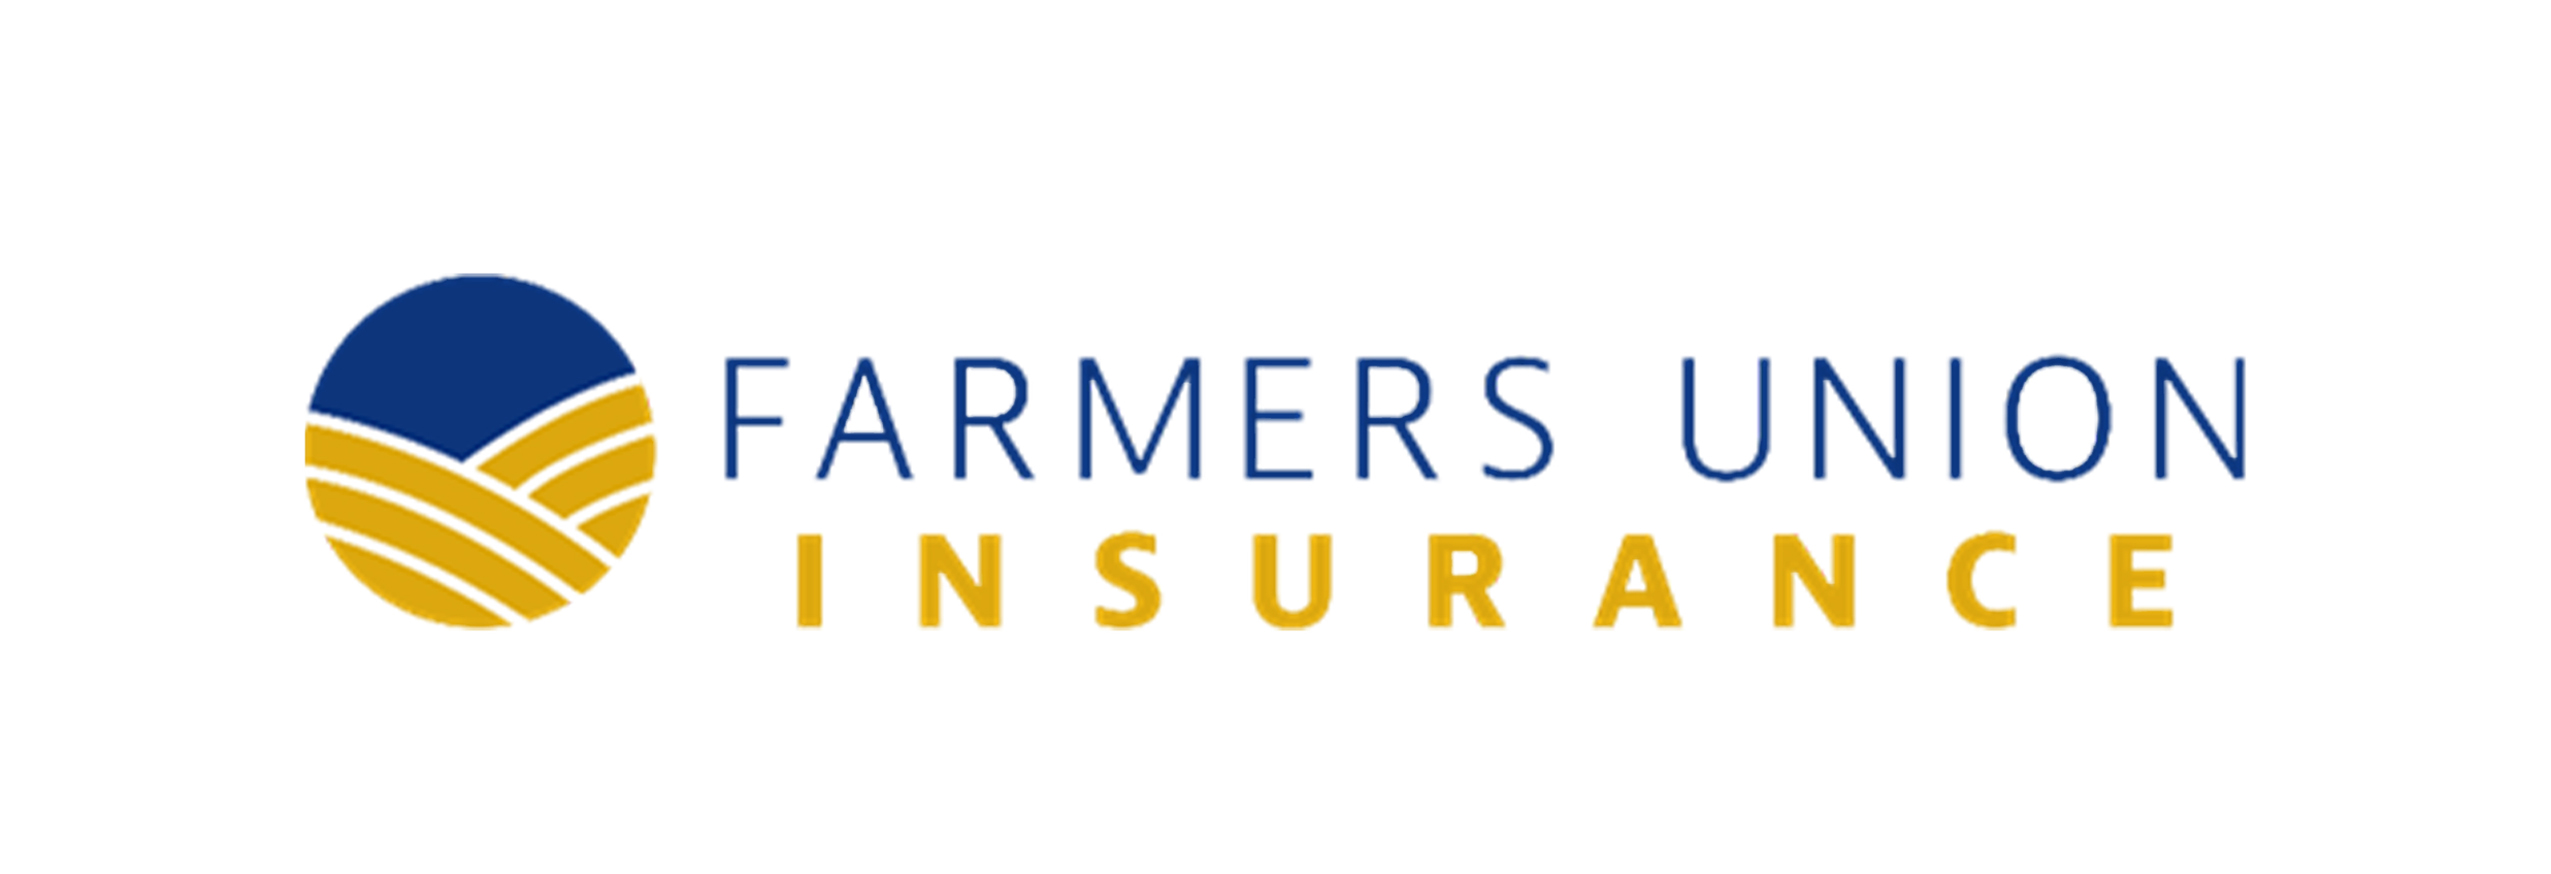 Farmers-Union-Insurance-2551x874-1